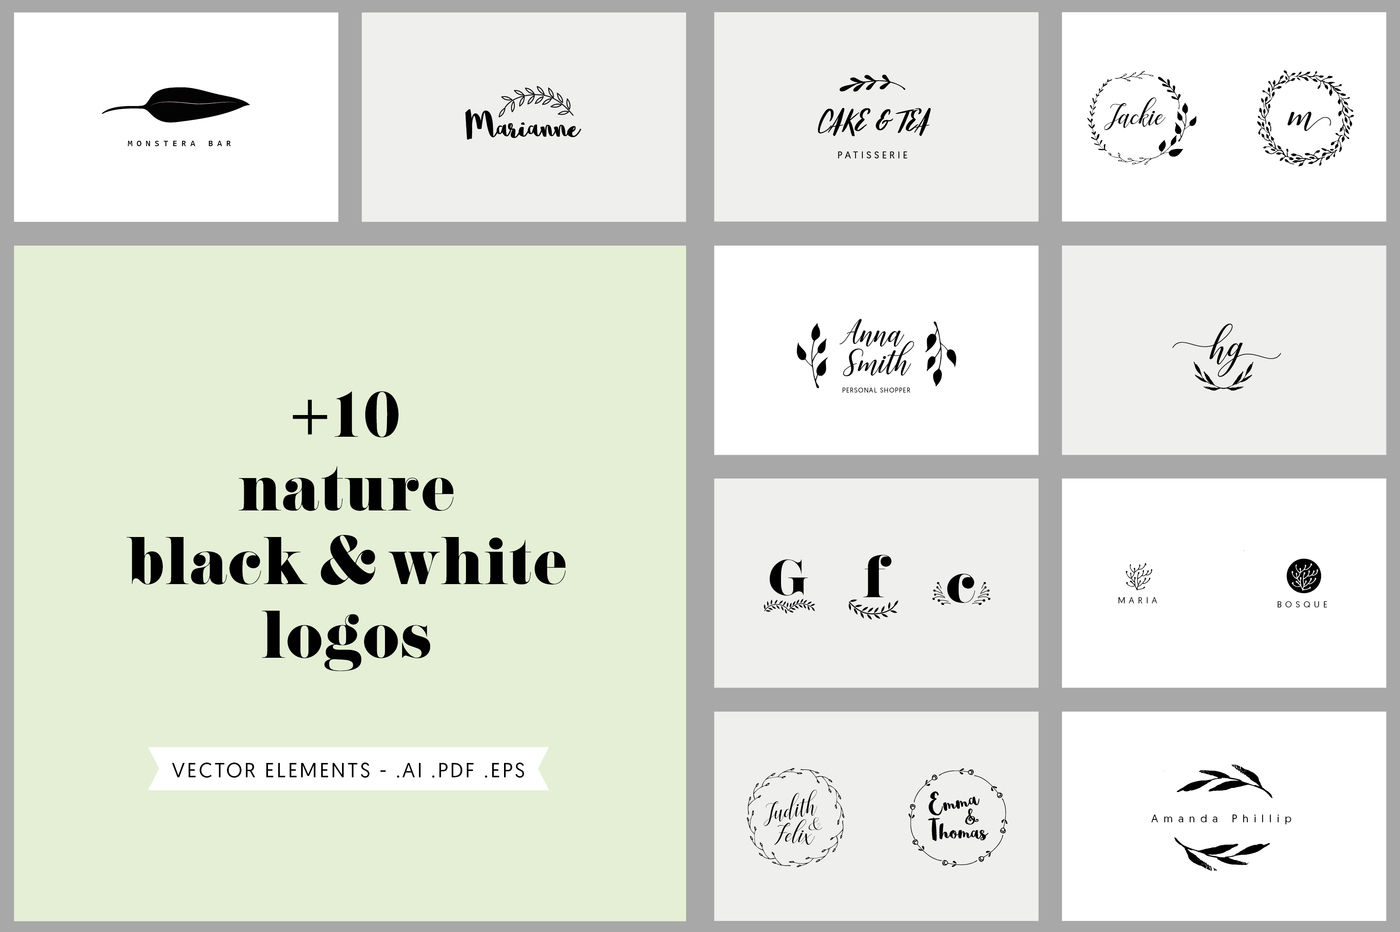 +50 simple logos By anisillustration | TheHungryJPEG.com